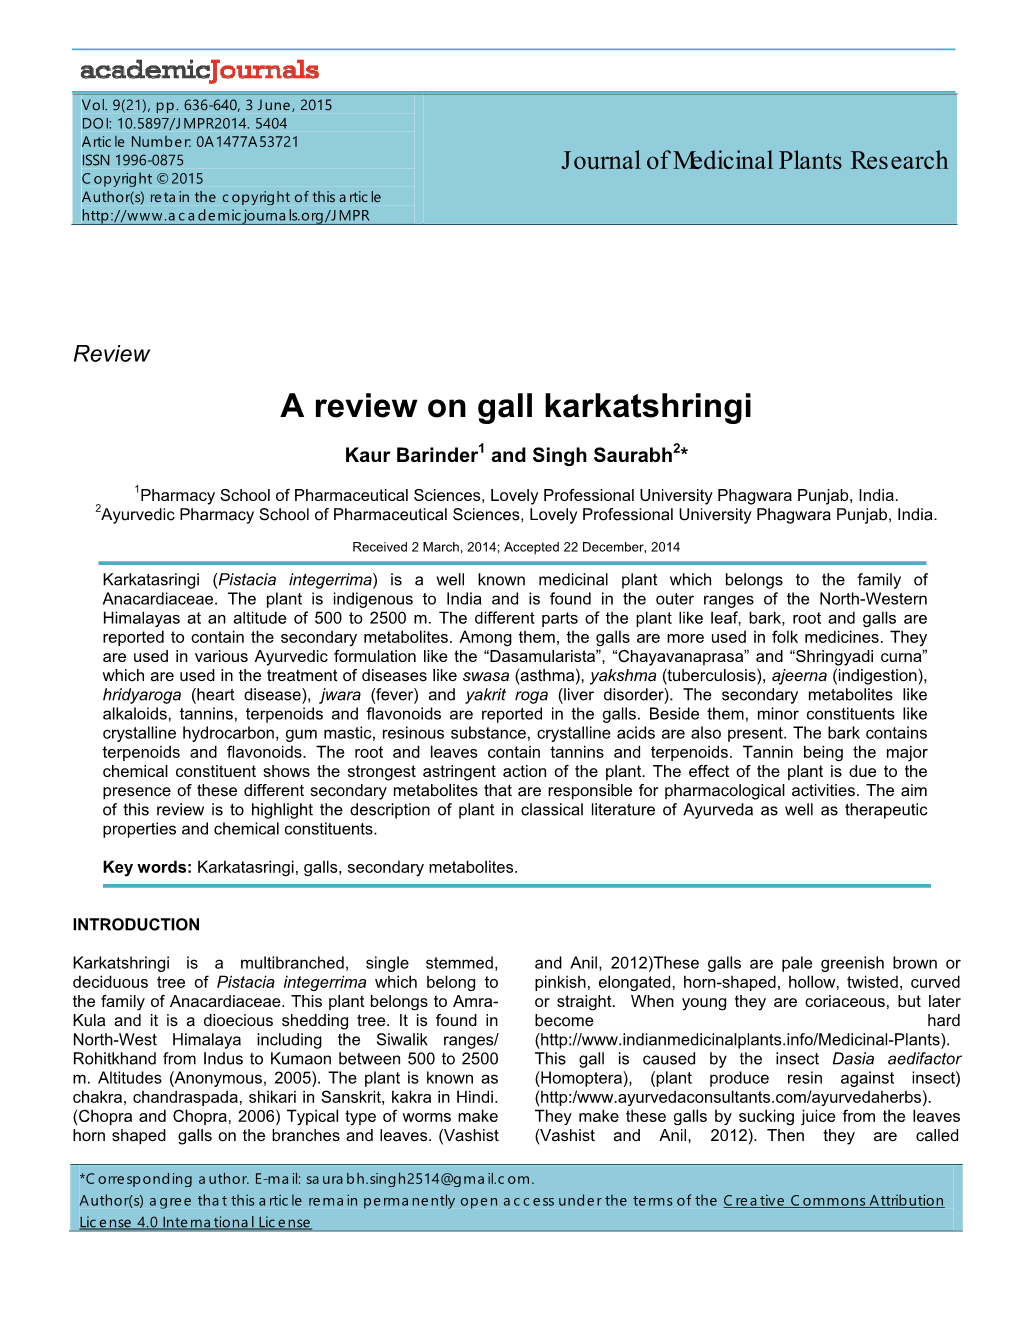 A Review on Gall Karkatshringi